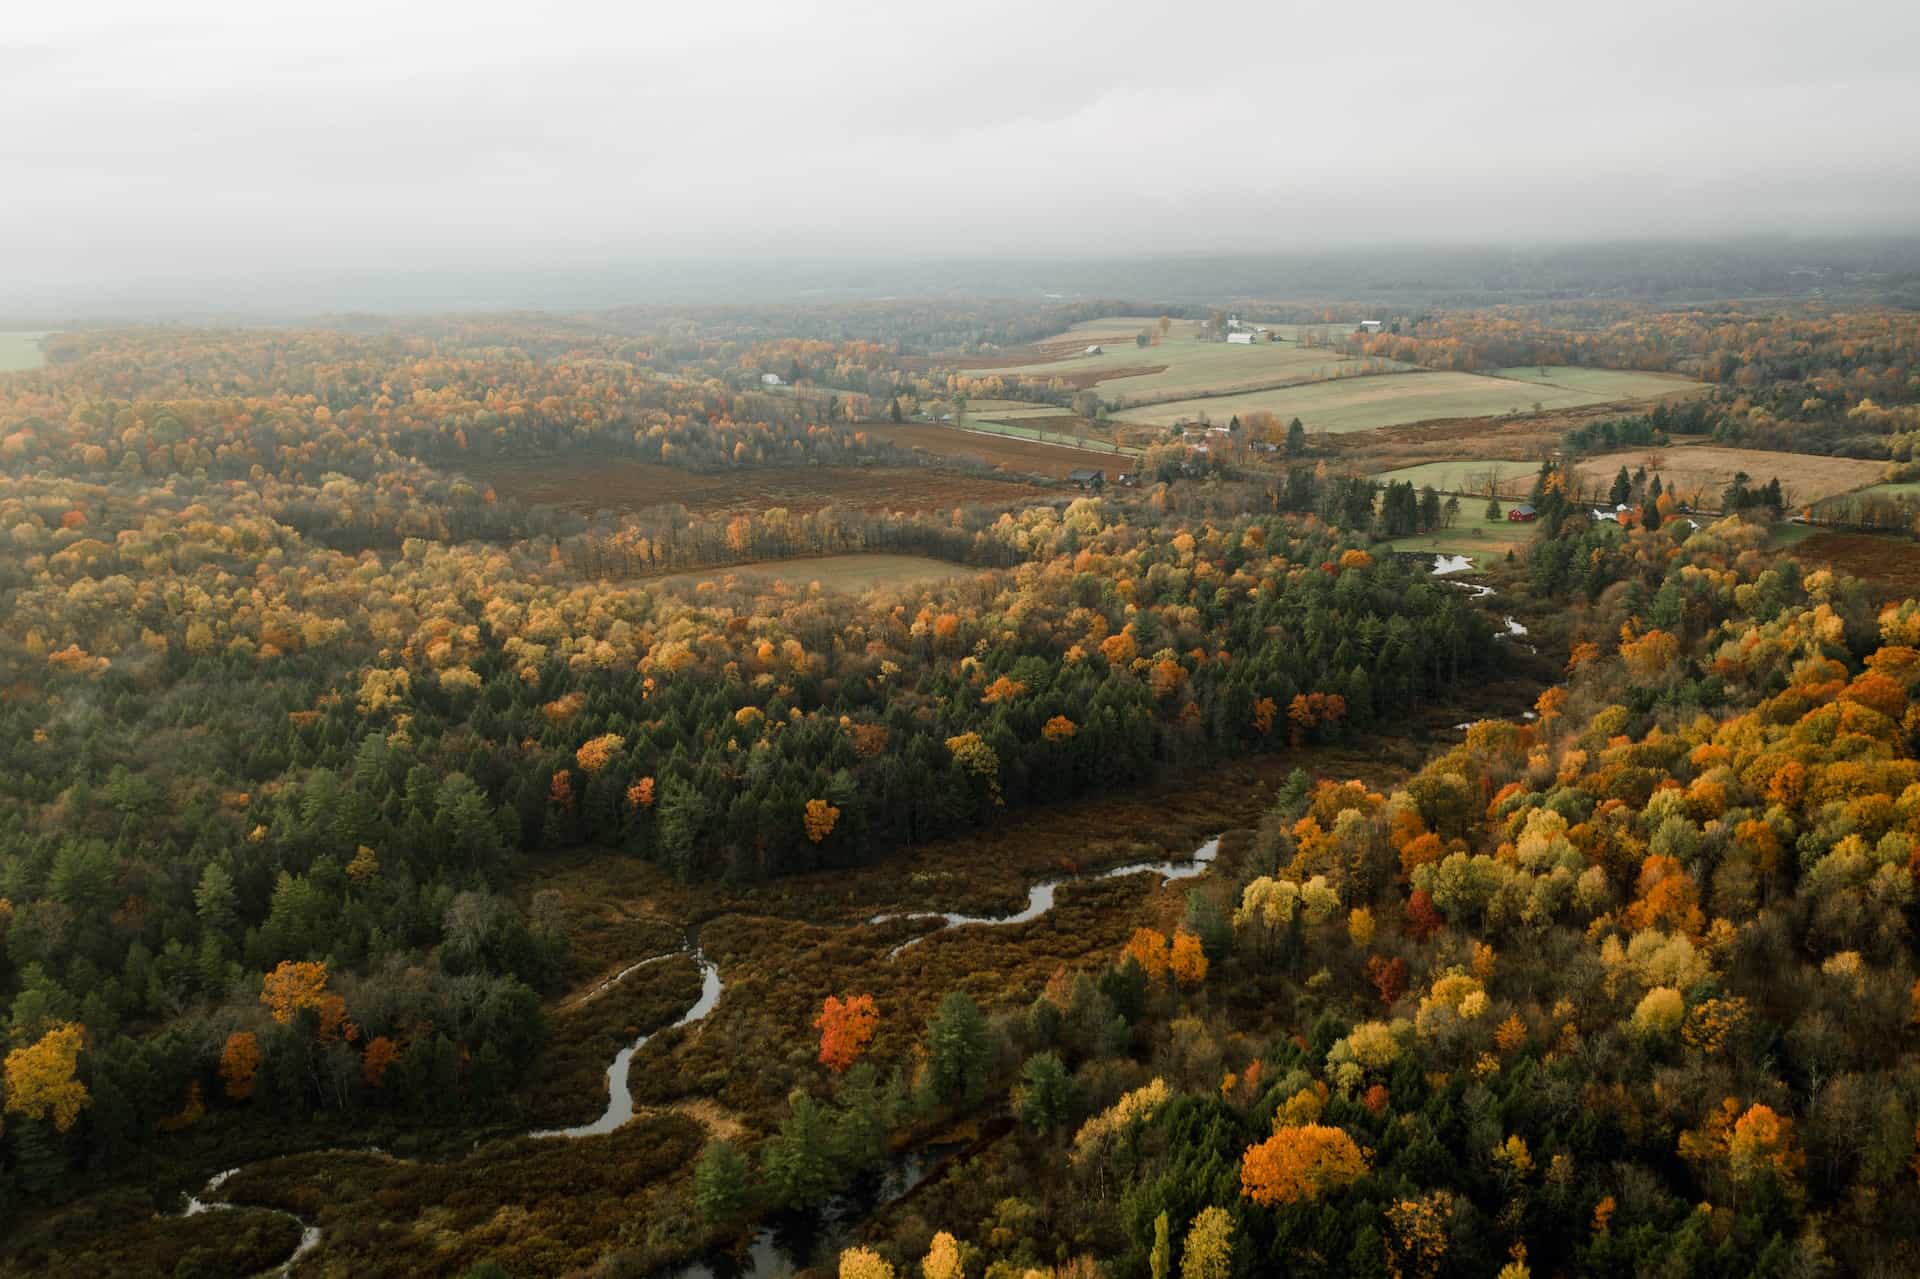 Pemandangan lanskap pedesaan di negara bagian AS Pennsylvania selama musim gugur, menampilkan hutan yang luas, sungai kecil, dan lahan pertanian.